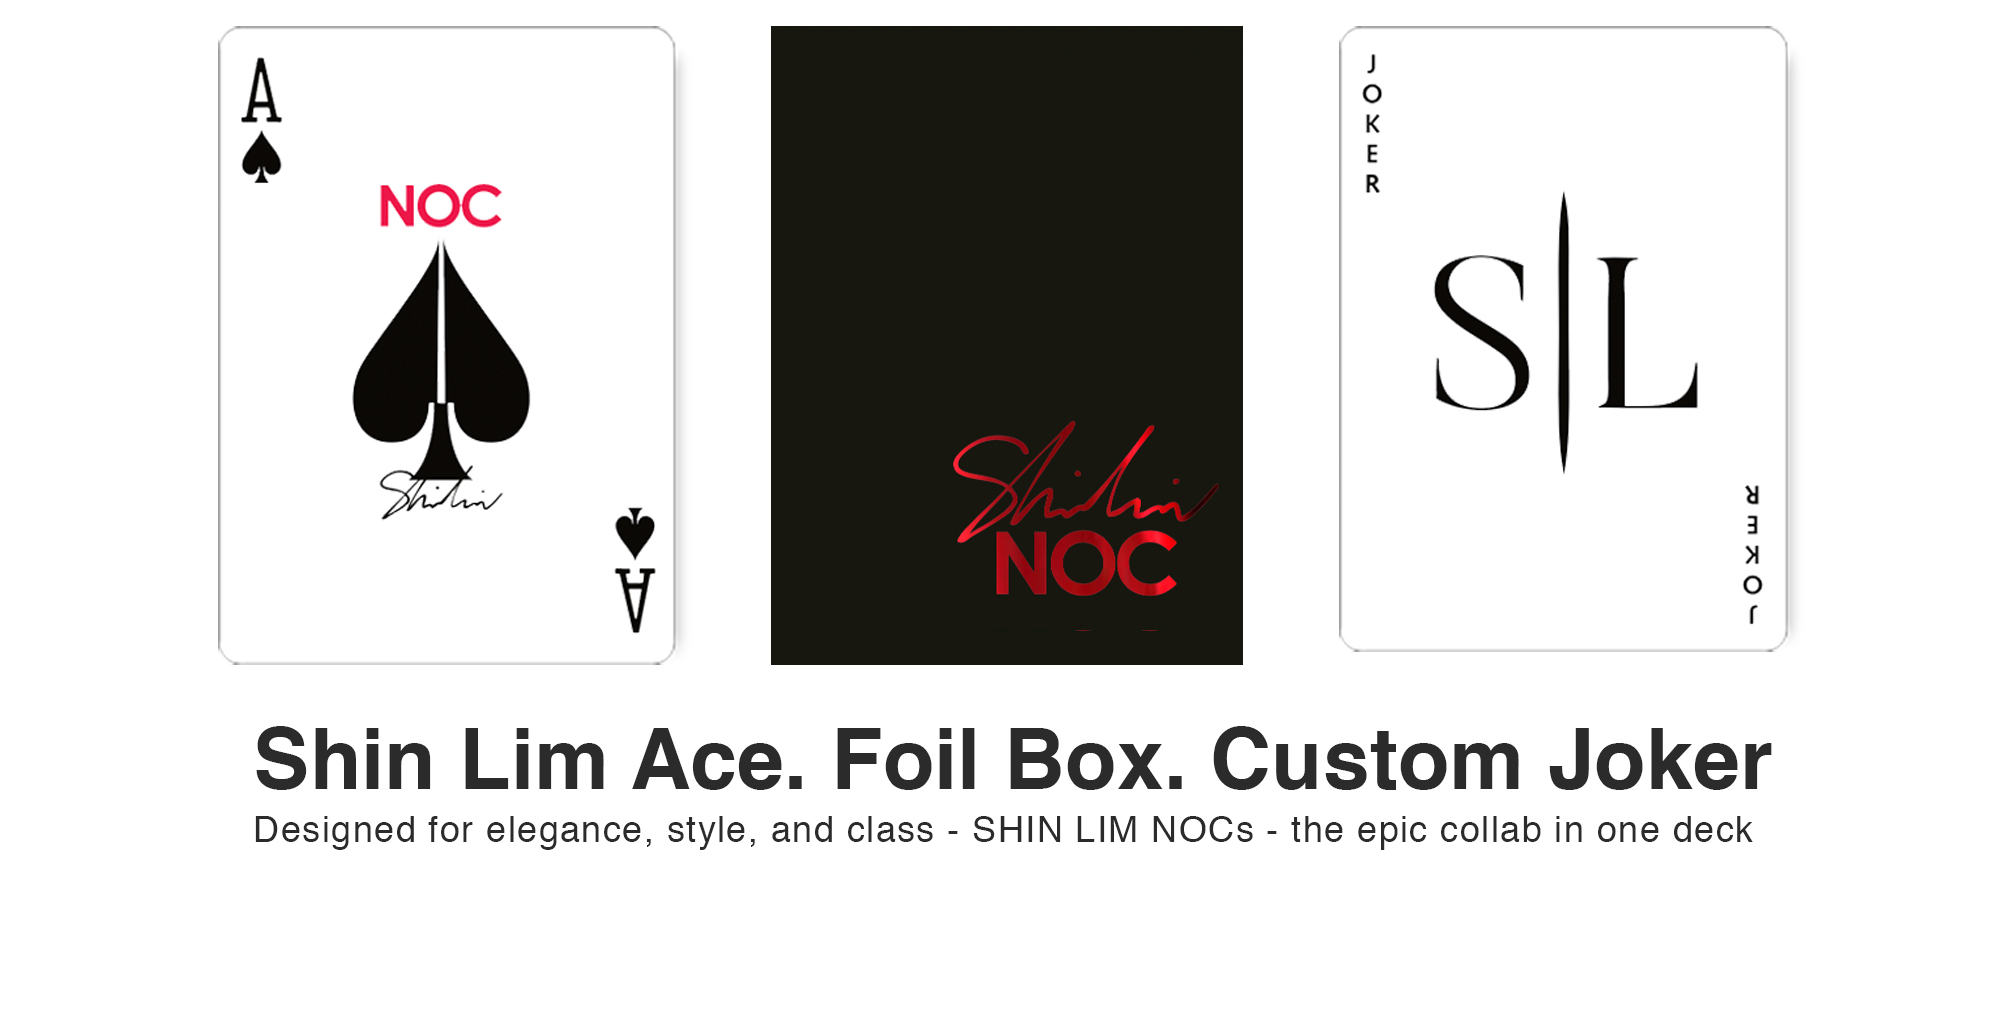 NOC x Shin Lim Playing Cards Poker Size Deck USPCC Custom Limited New Sealed 